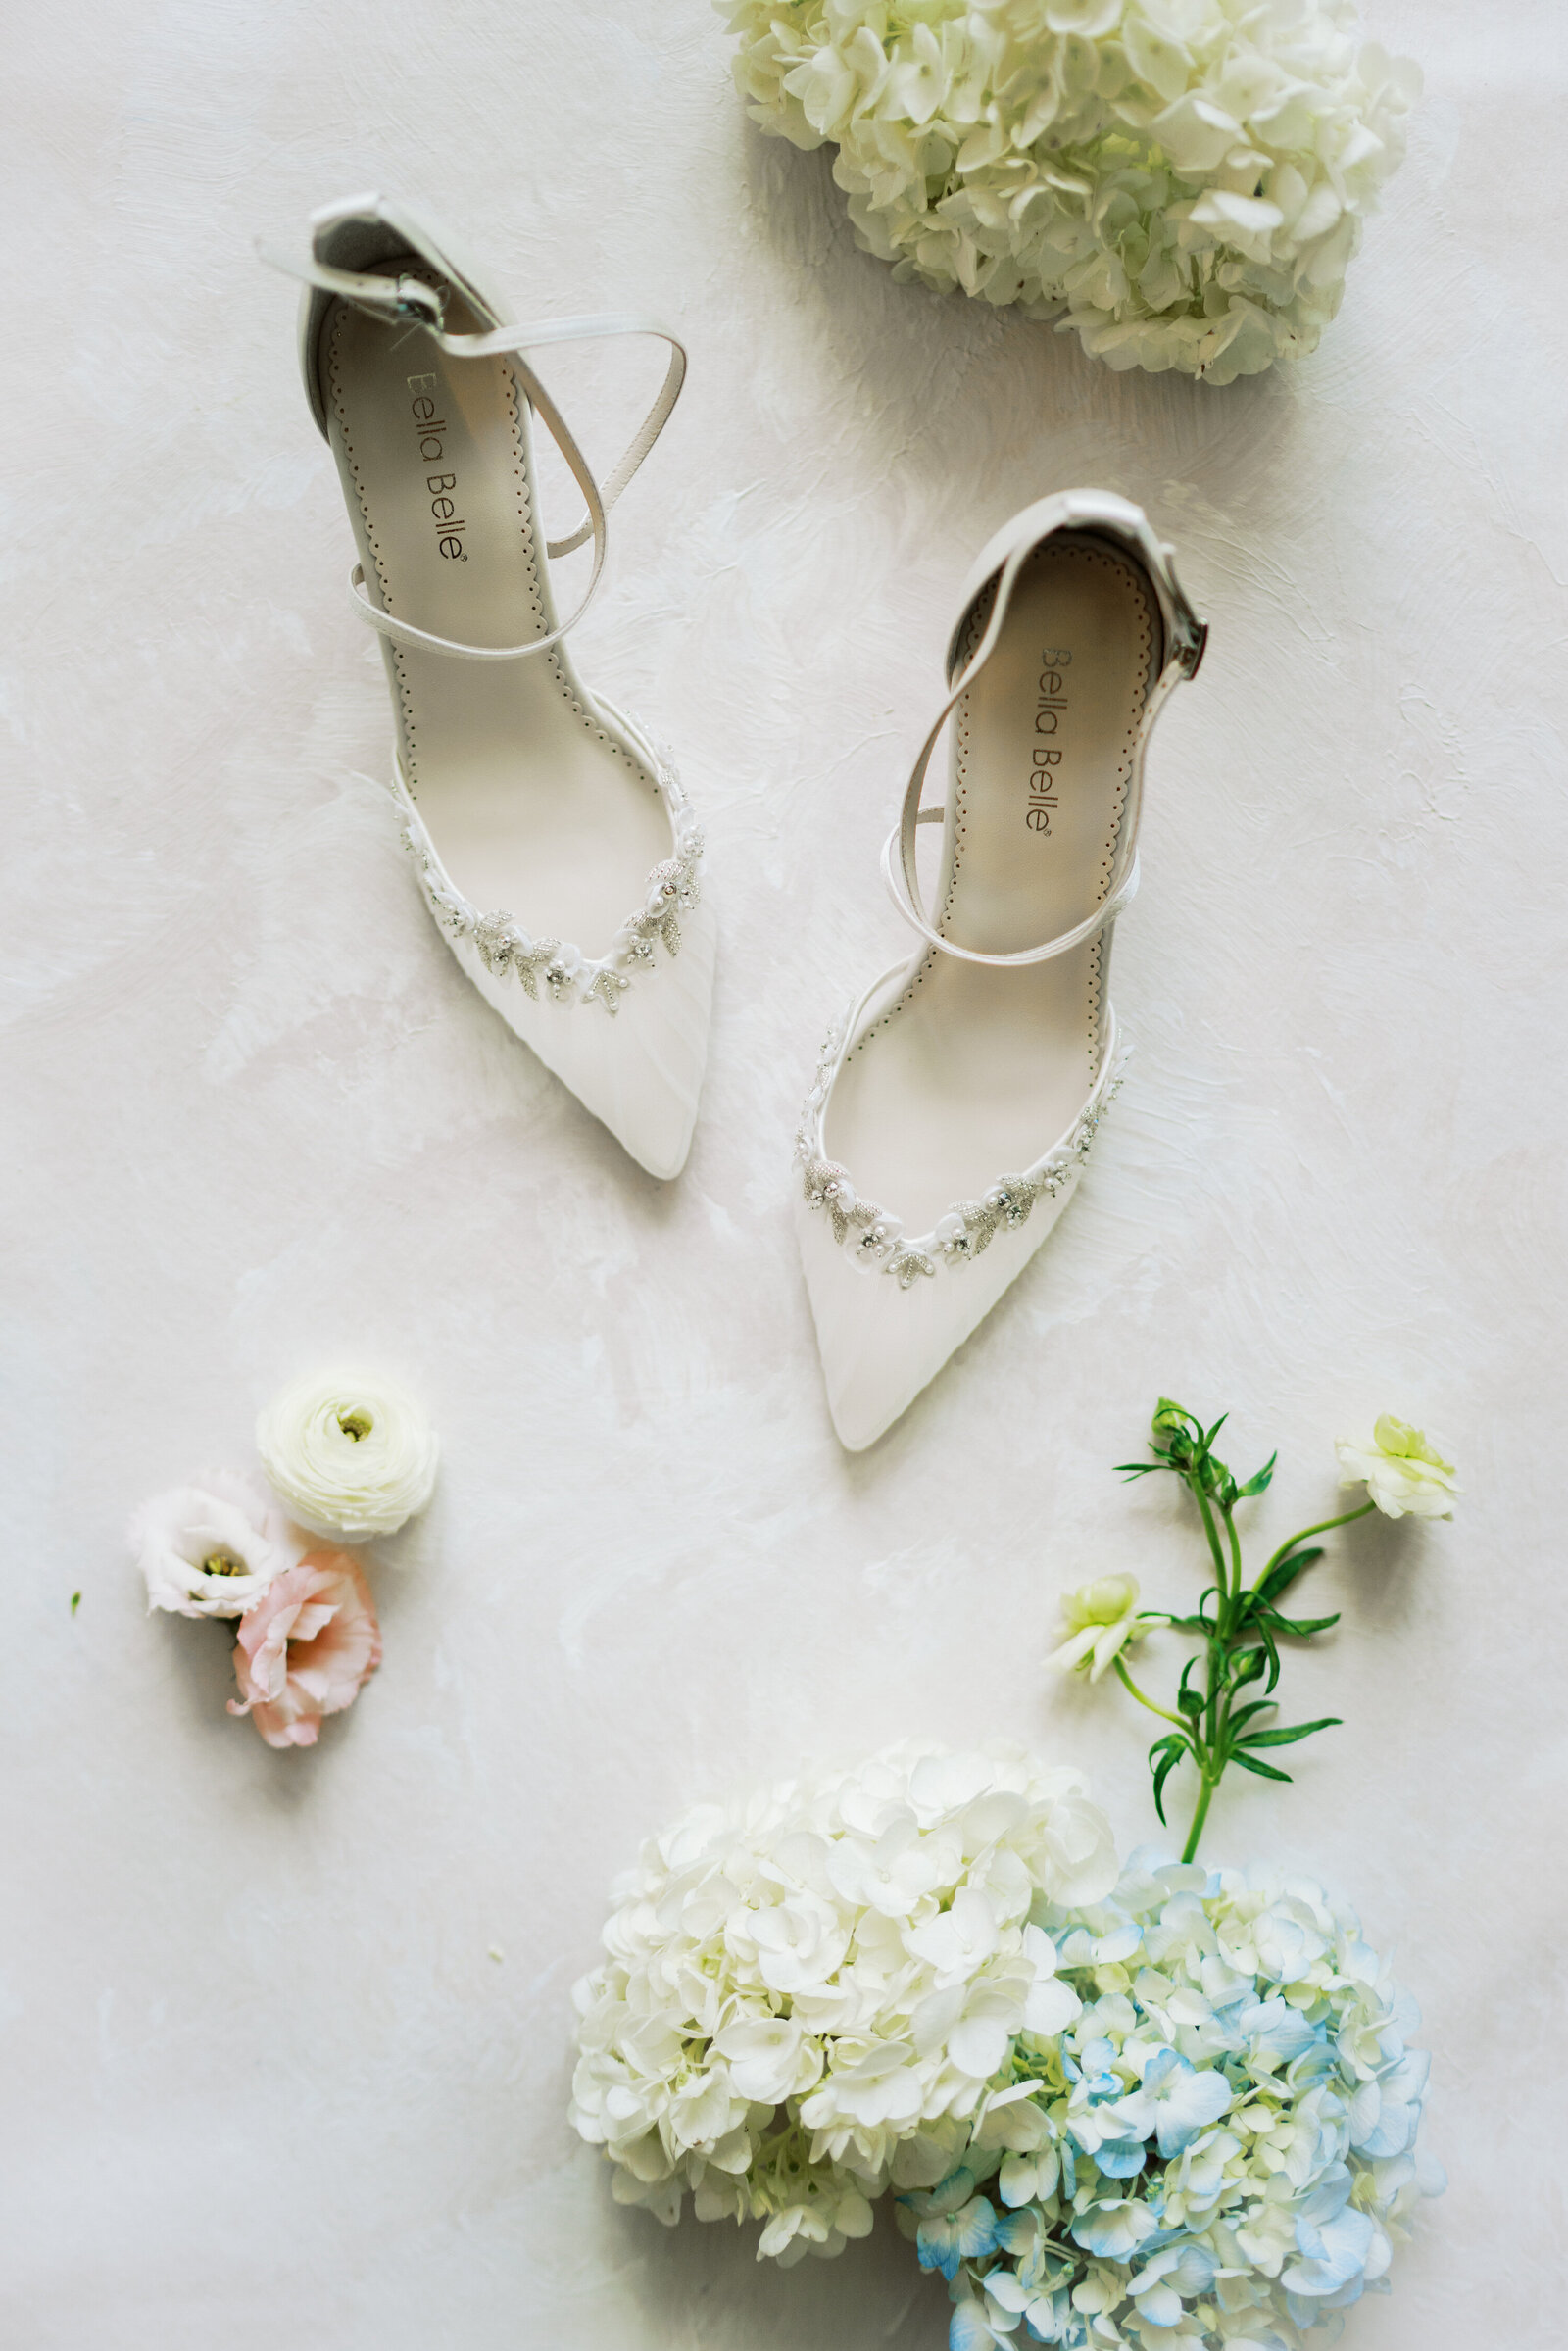 Nemacolin-Luxury-Wedding-Planner-French-Blue-Palette-Novalee-Events-Co-Bella-Belle-Shoes